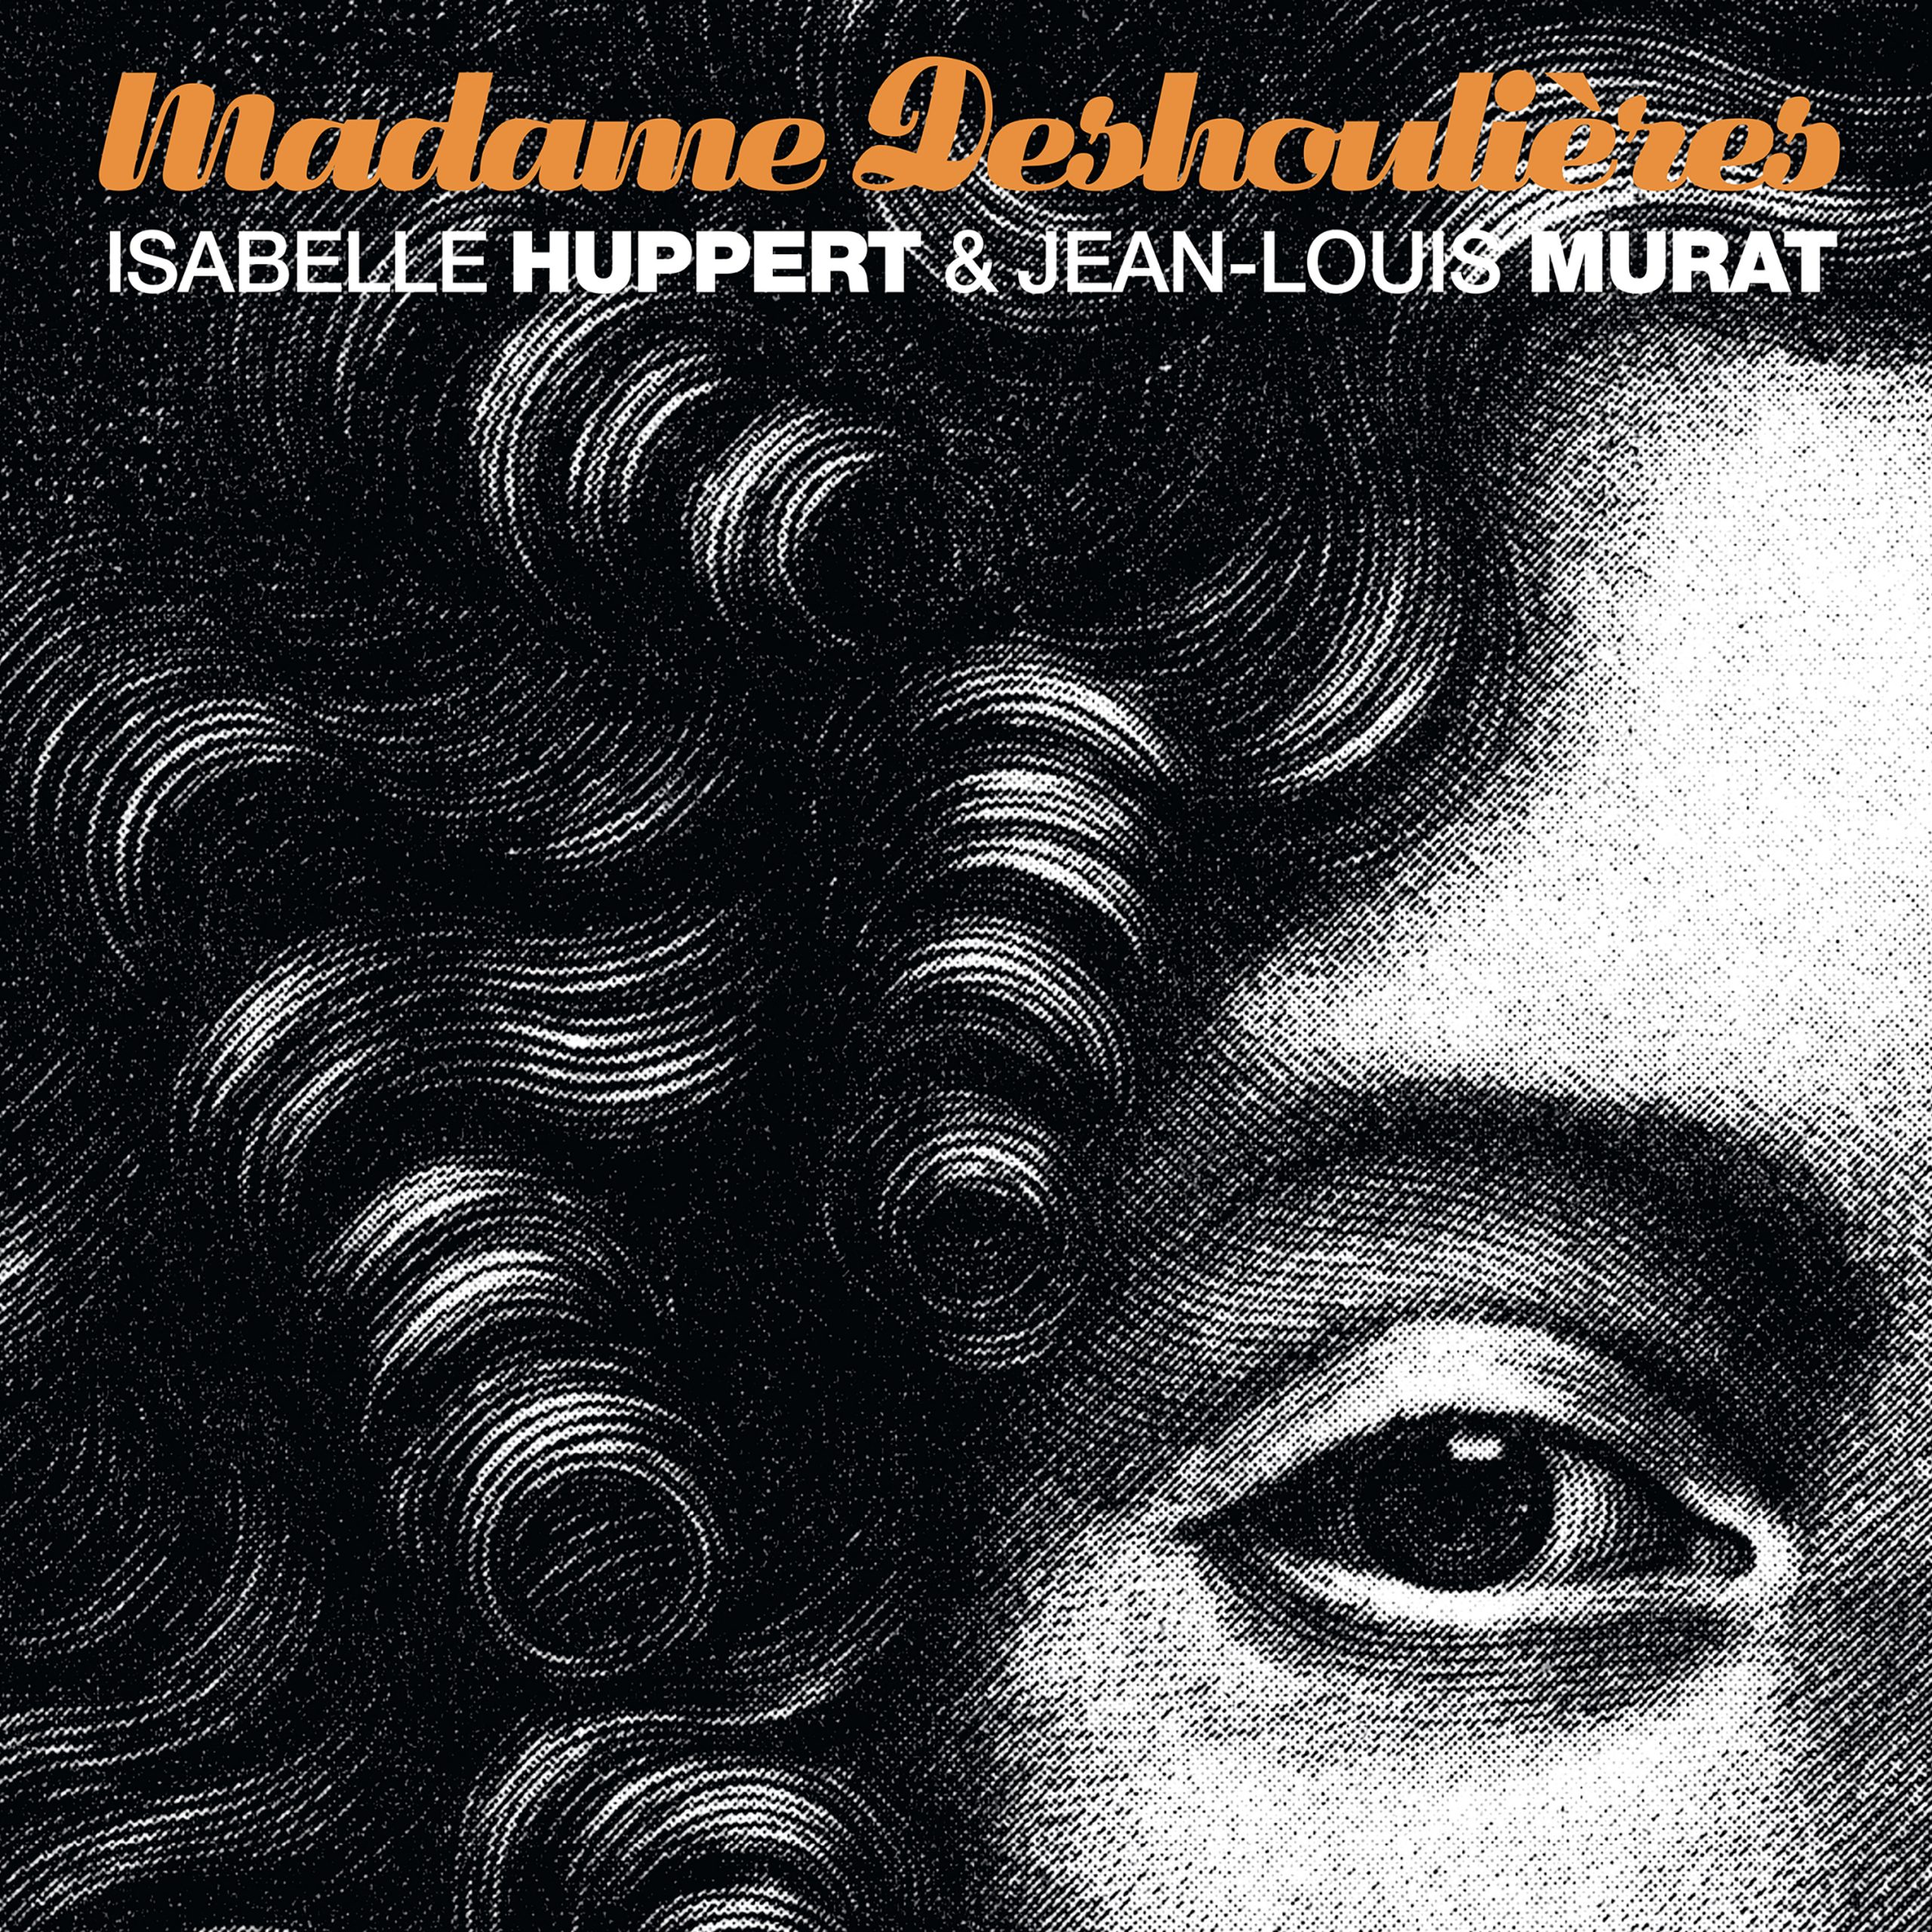 Madame Deshoulières - Isabelle Huppert & Jean-Louis Murat